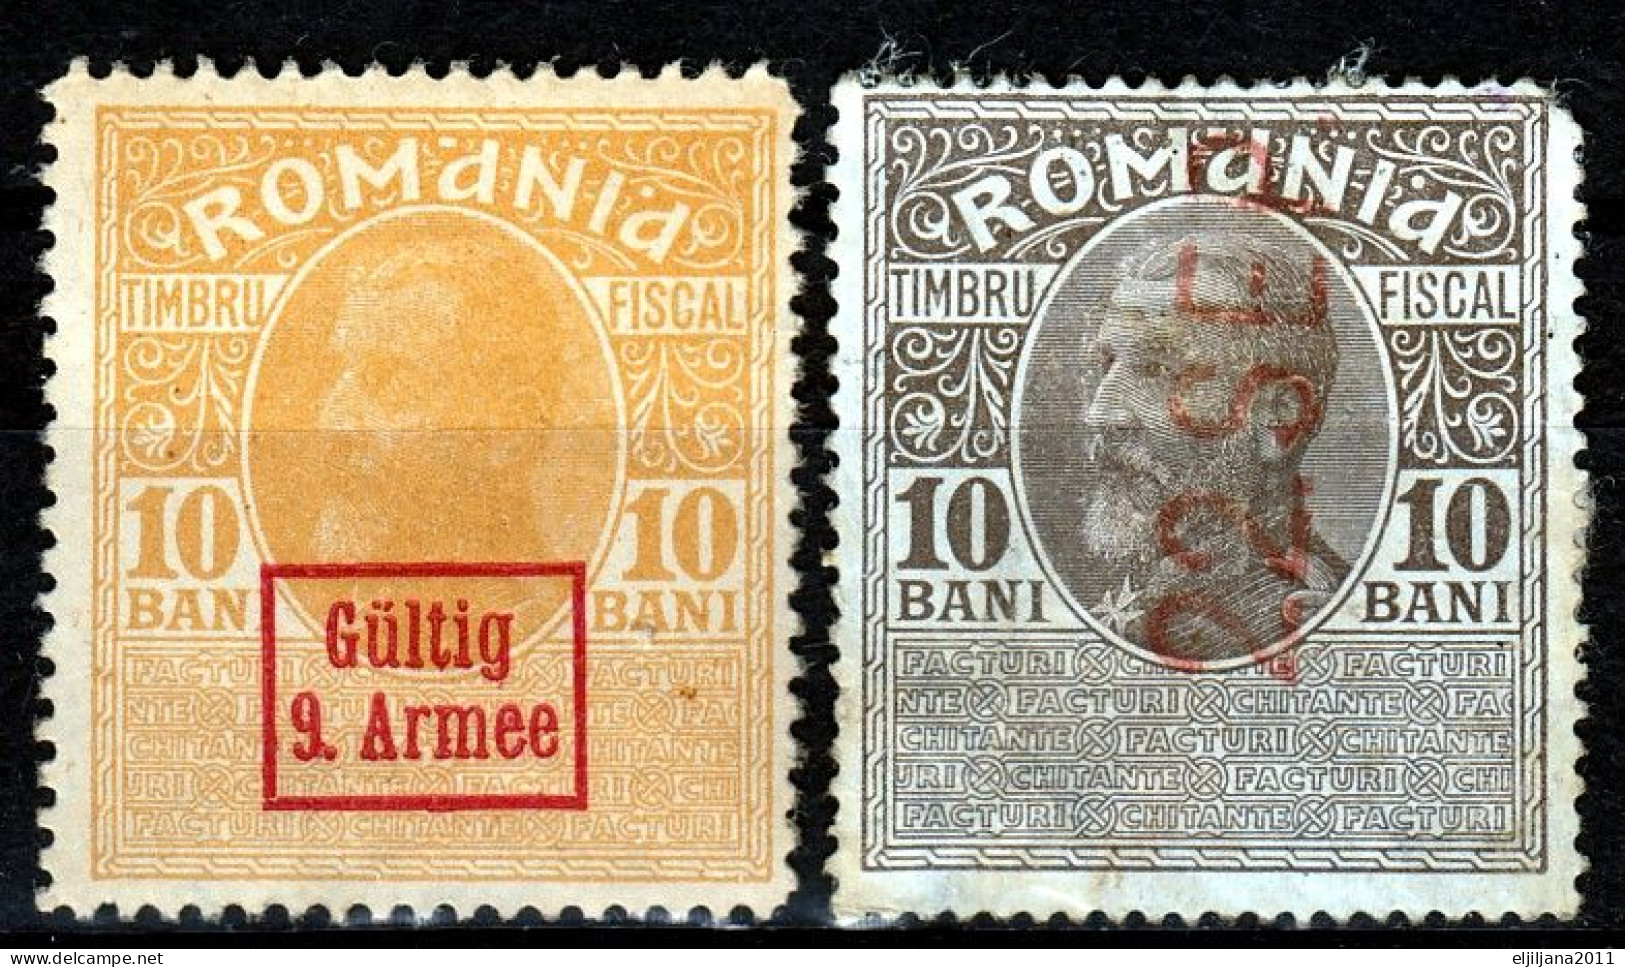 ⁕ Romania 1917 - 1918 Rumänien WWI ⁕ German Occupation "Gültig 9. Armee" Revenue Fiscal Tax Timbru 10 Bani ⁕ 2v MNH & MH - Ocupaciones